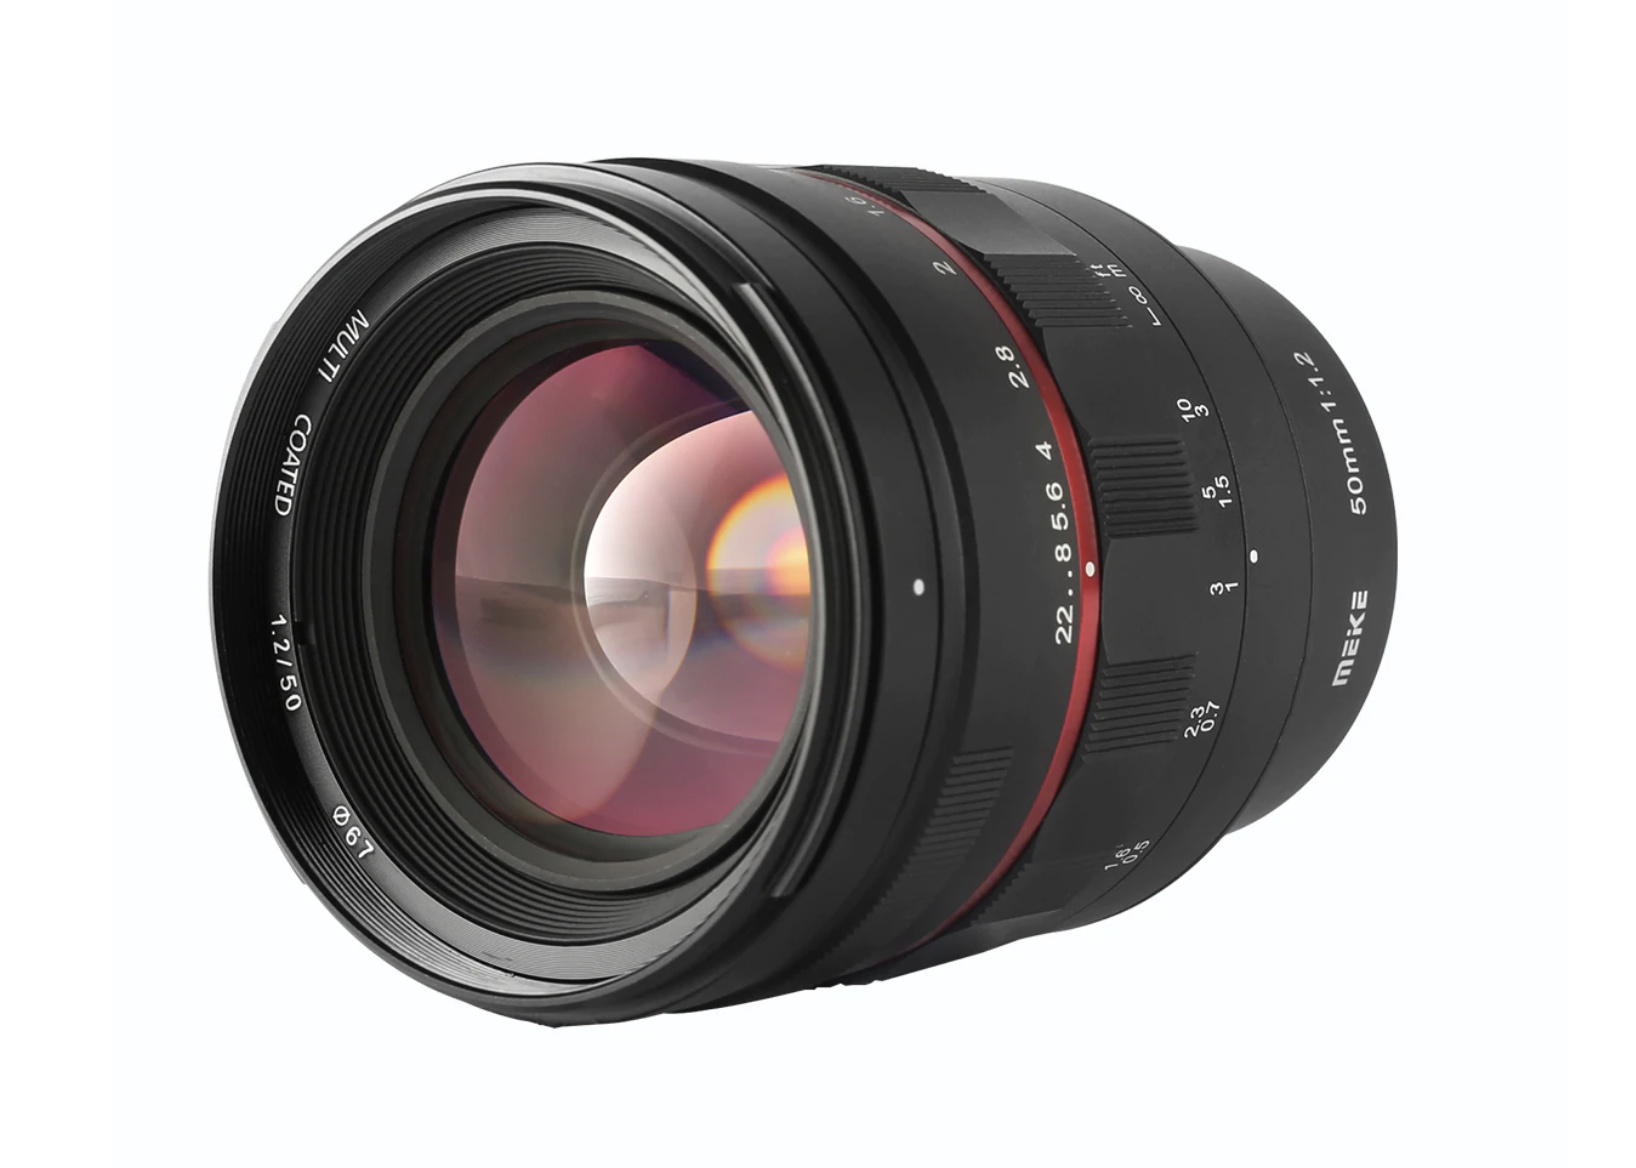 Meike 50mm f/1.2 Large Aperture Manual Focus Lens for (E Mount)